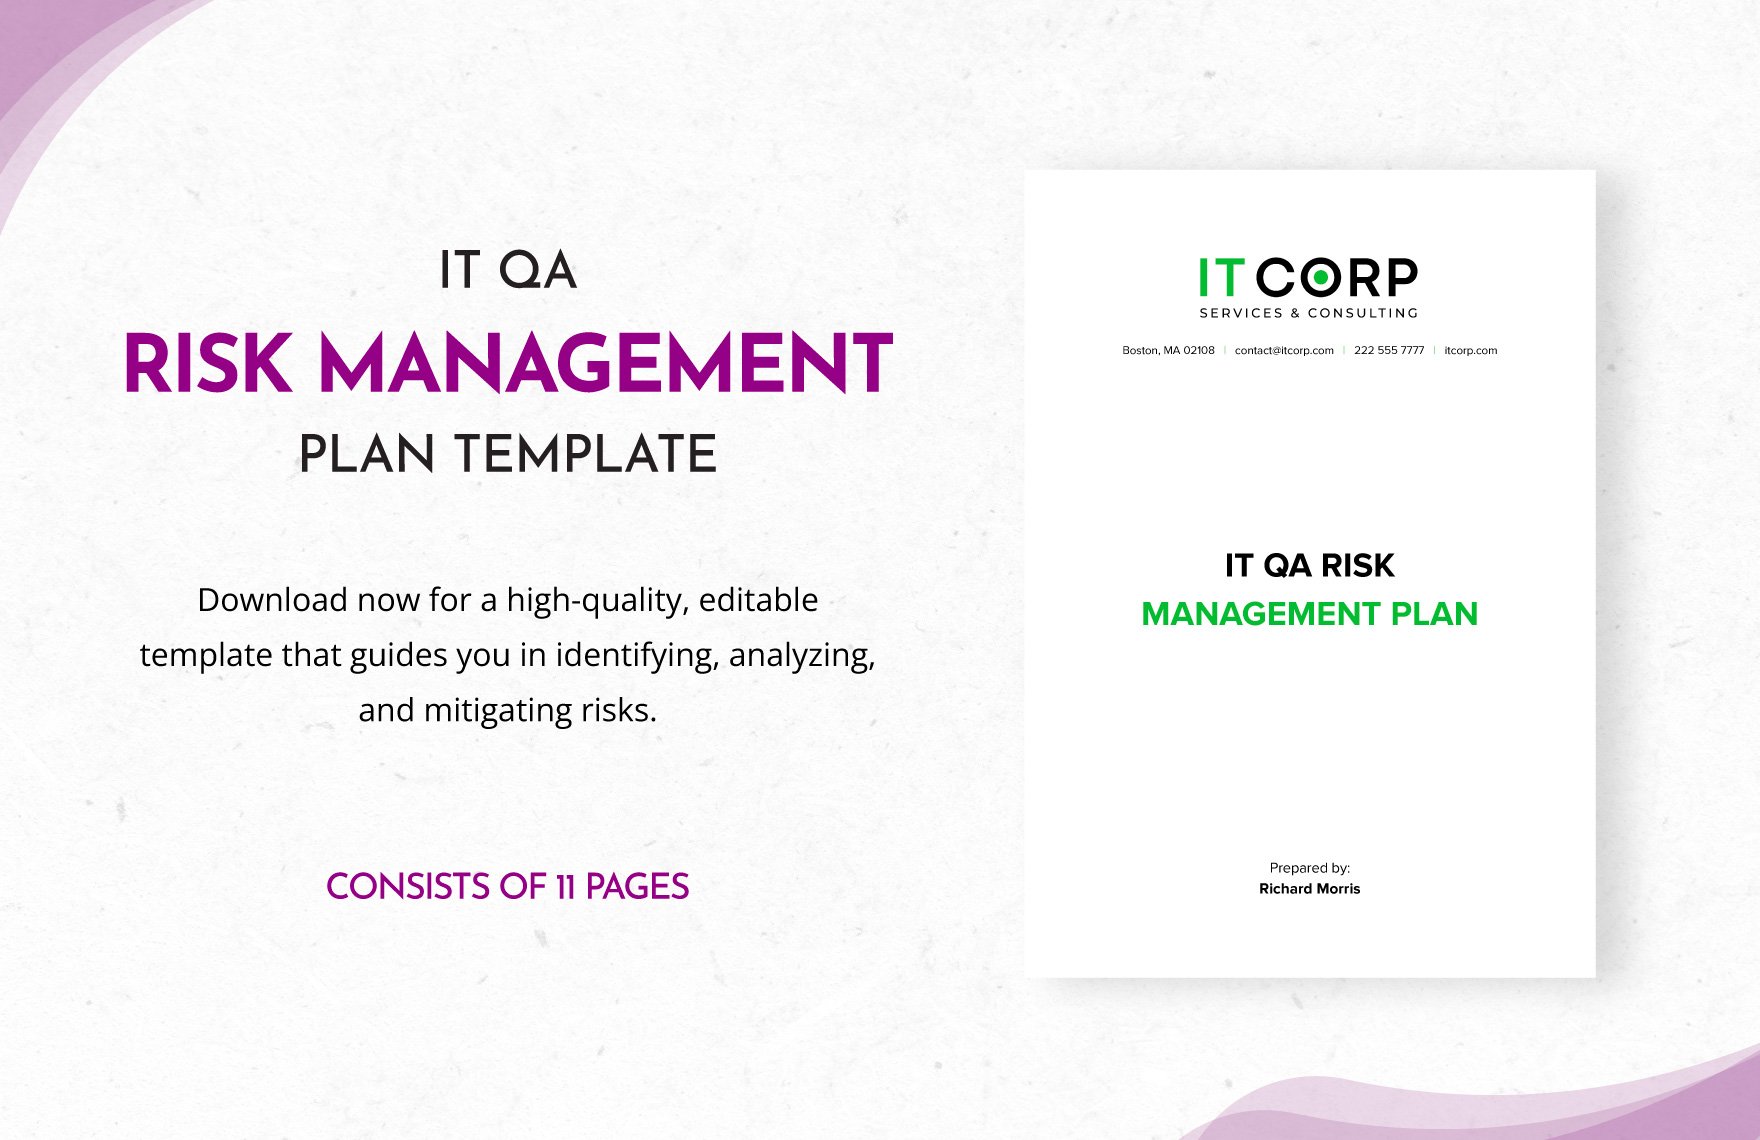 IT QA Risk Management Plan Template